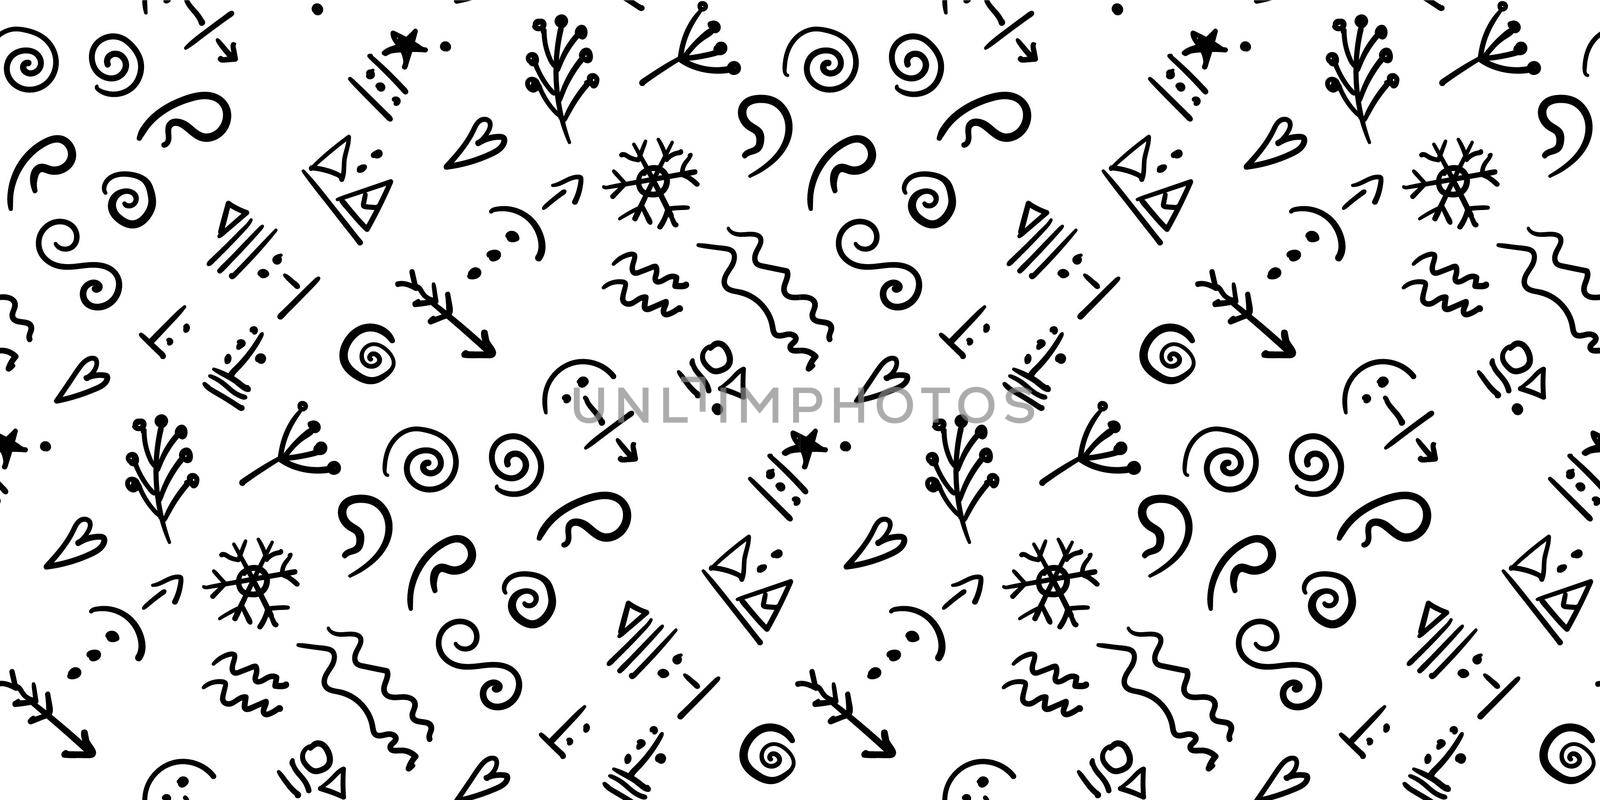 Ancient runes. Rock painting. Illustration in folk style. Stylized characters. Scandinavian print. Seamless pattern. by annatarankova